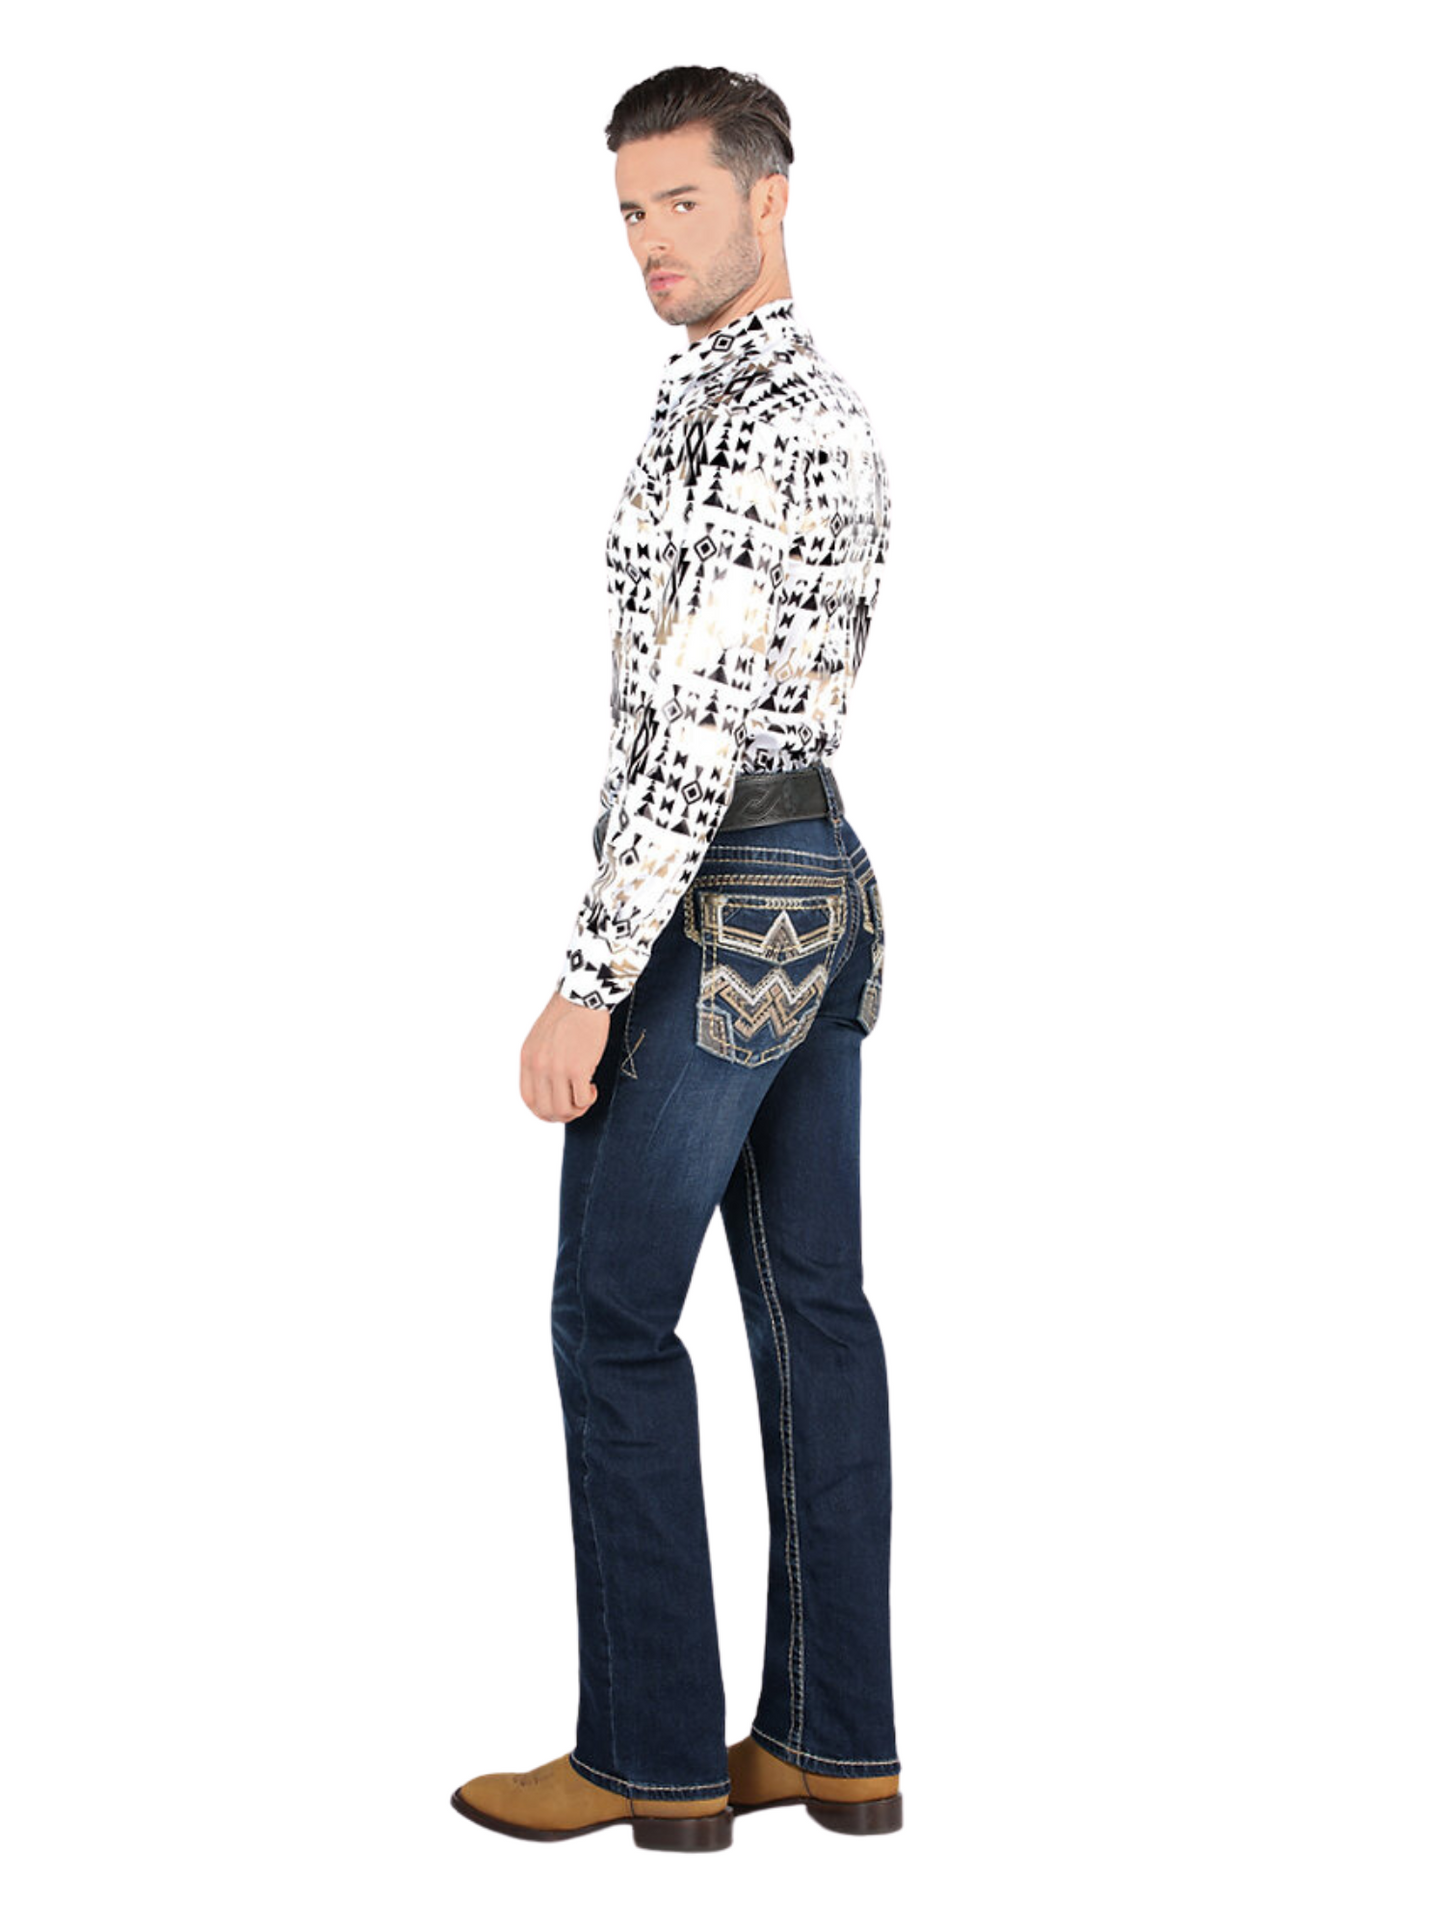 Stretch Denim Jeans for Men 'Montero' - ID: 4598 Denim Jeans Montero